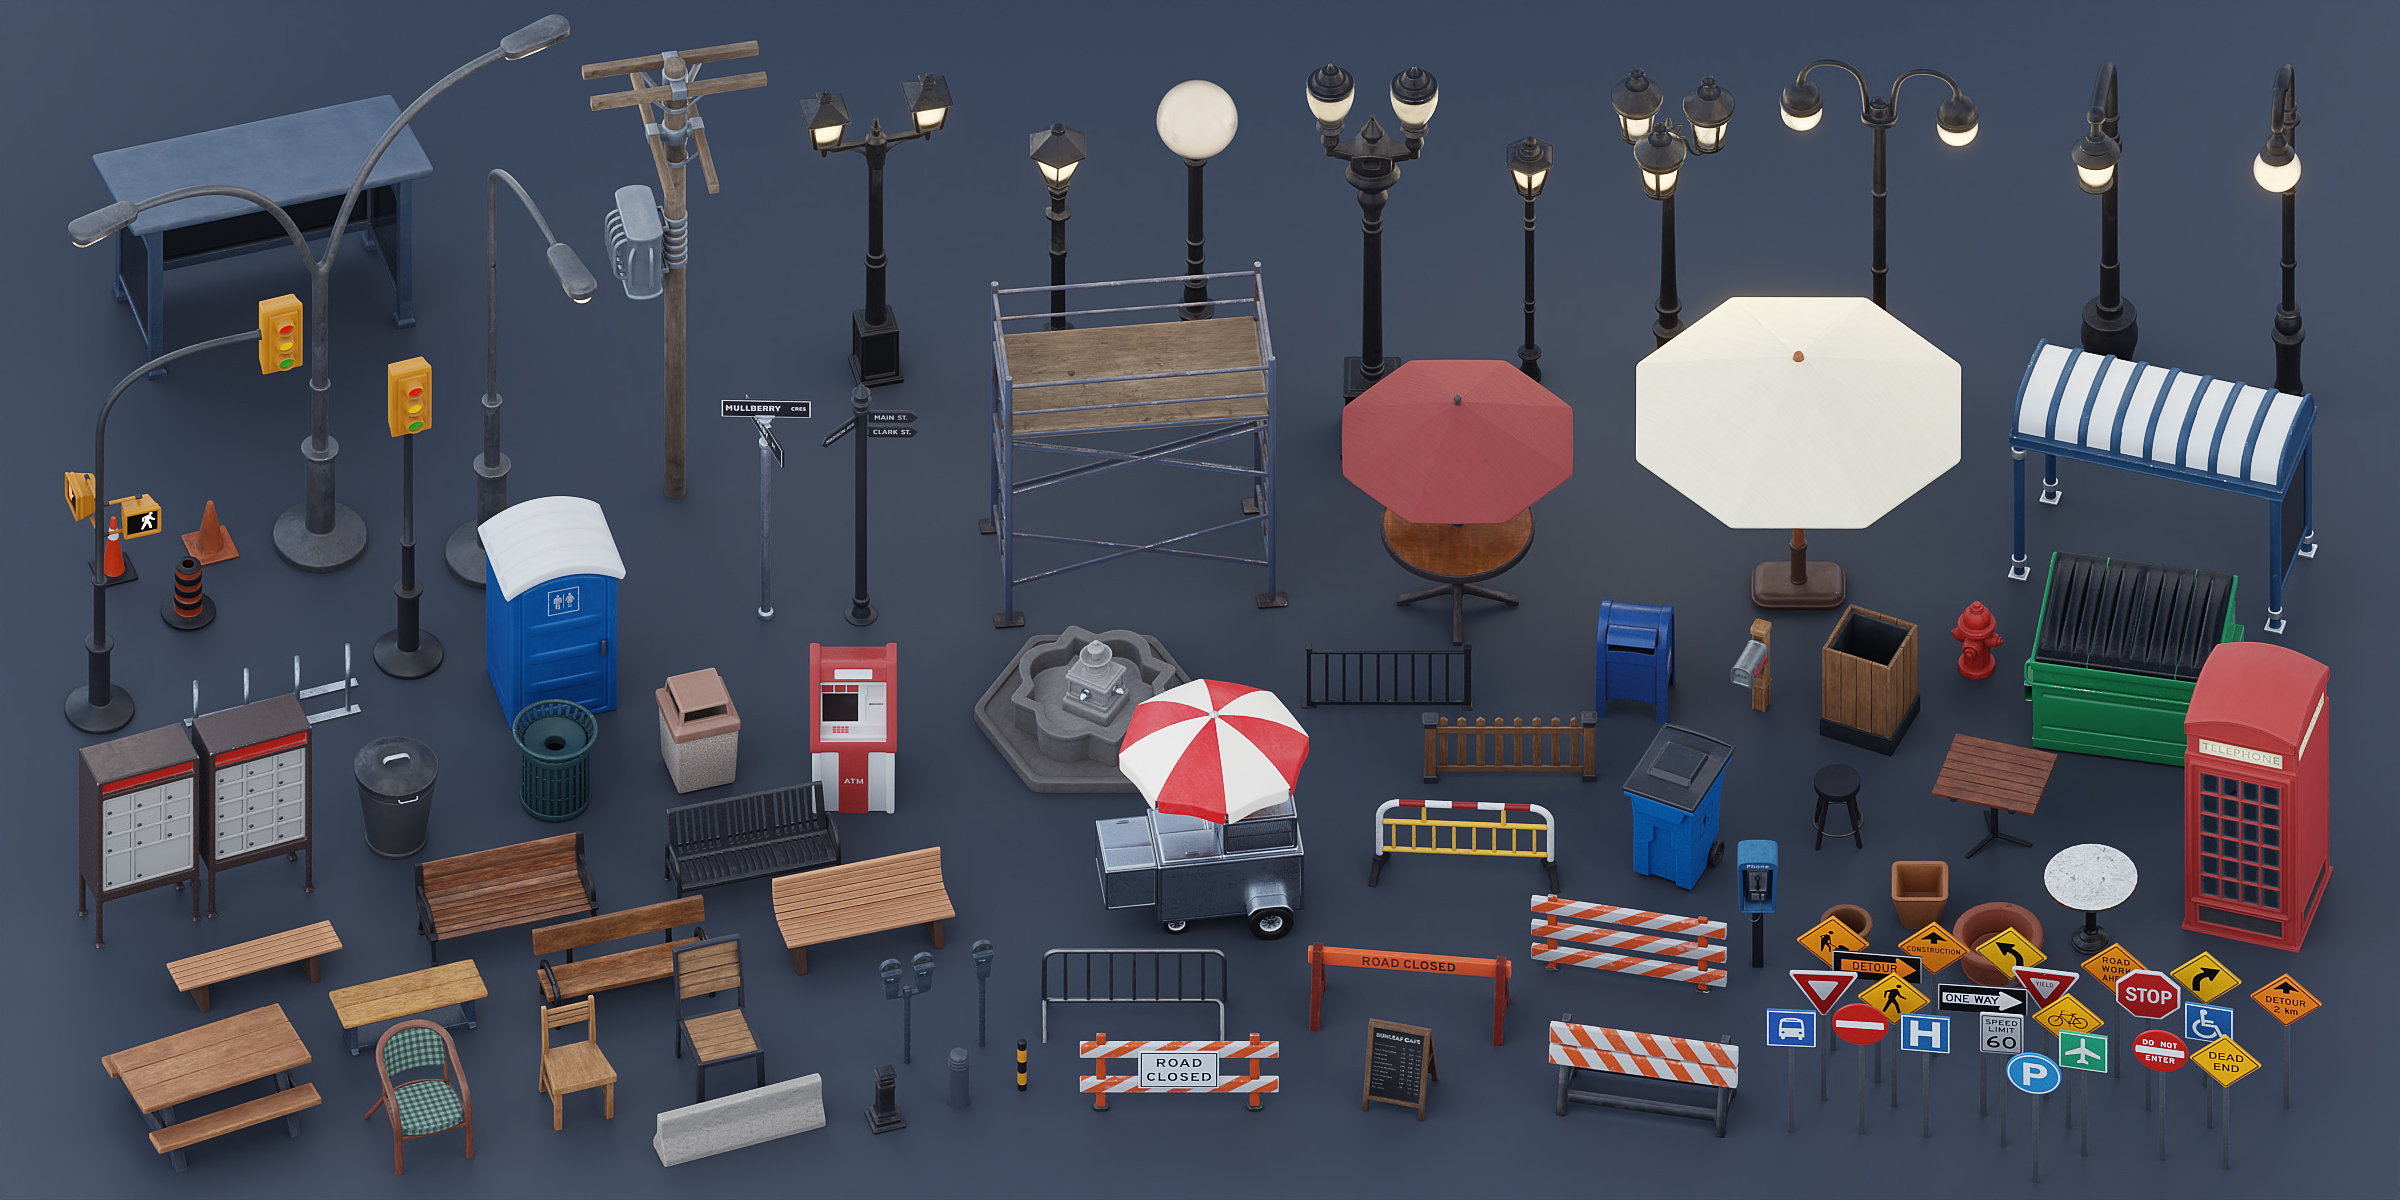 Cratial 3D - Stylized City Accessories 3D Model Pack